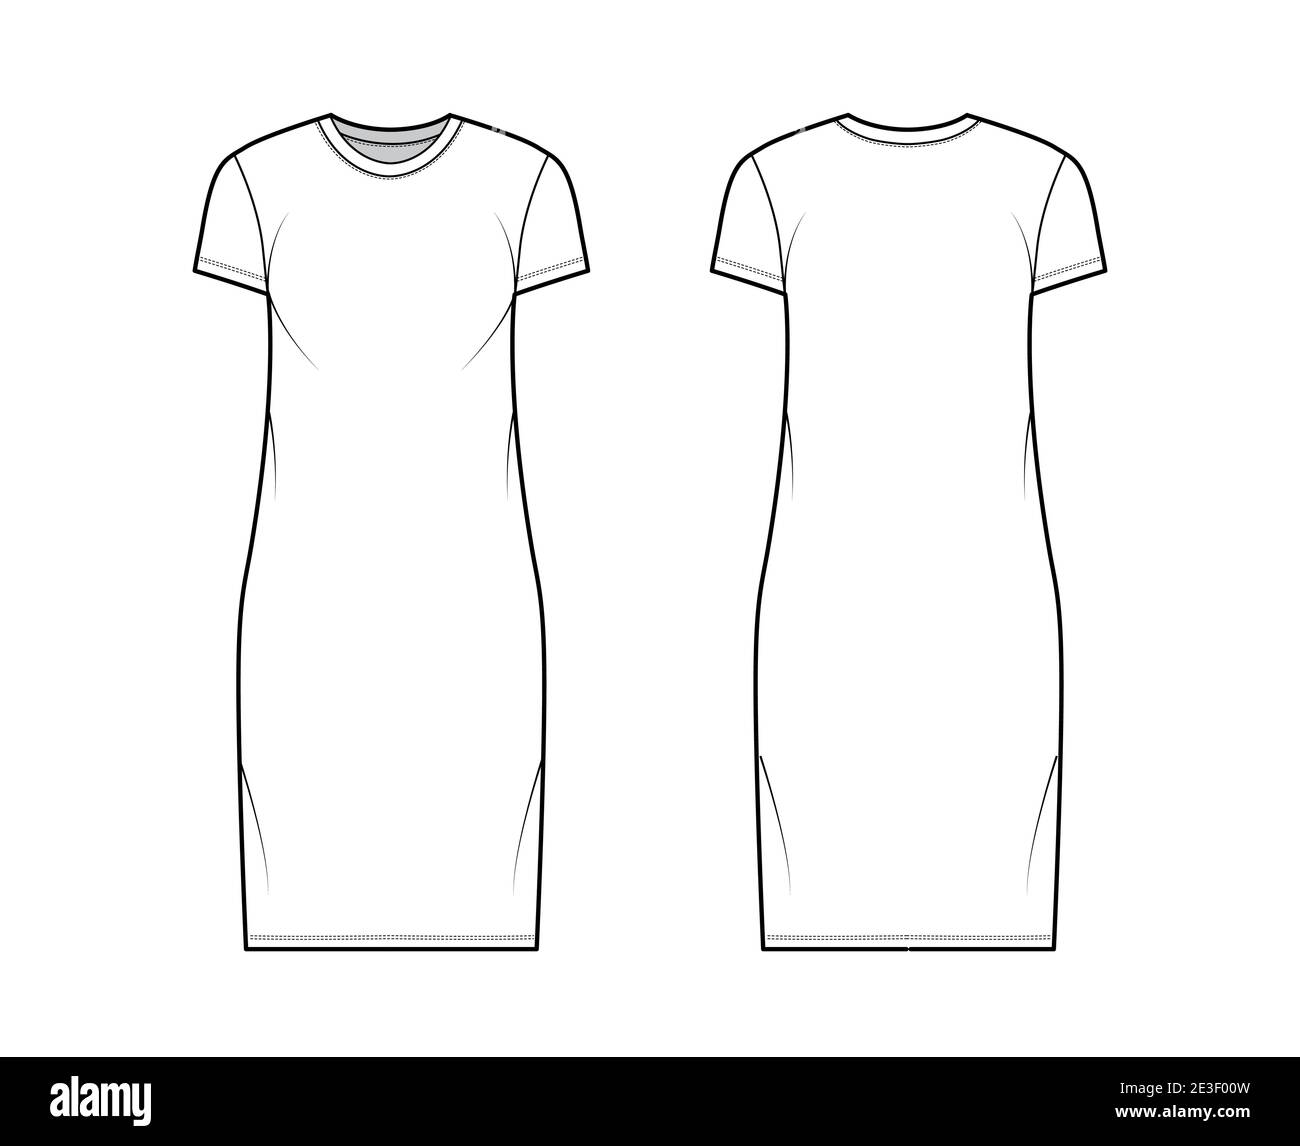 T-shirt dress technical fashion illustration with crew neck, short ...